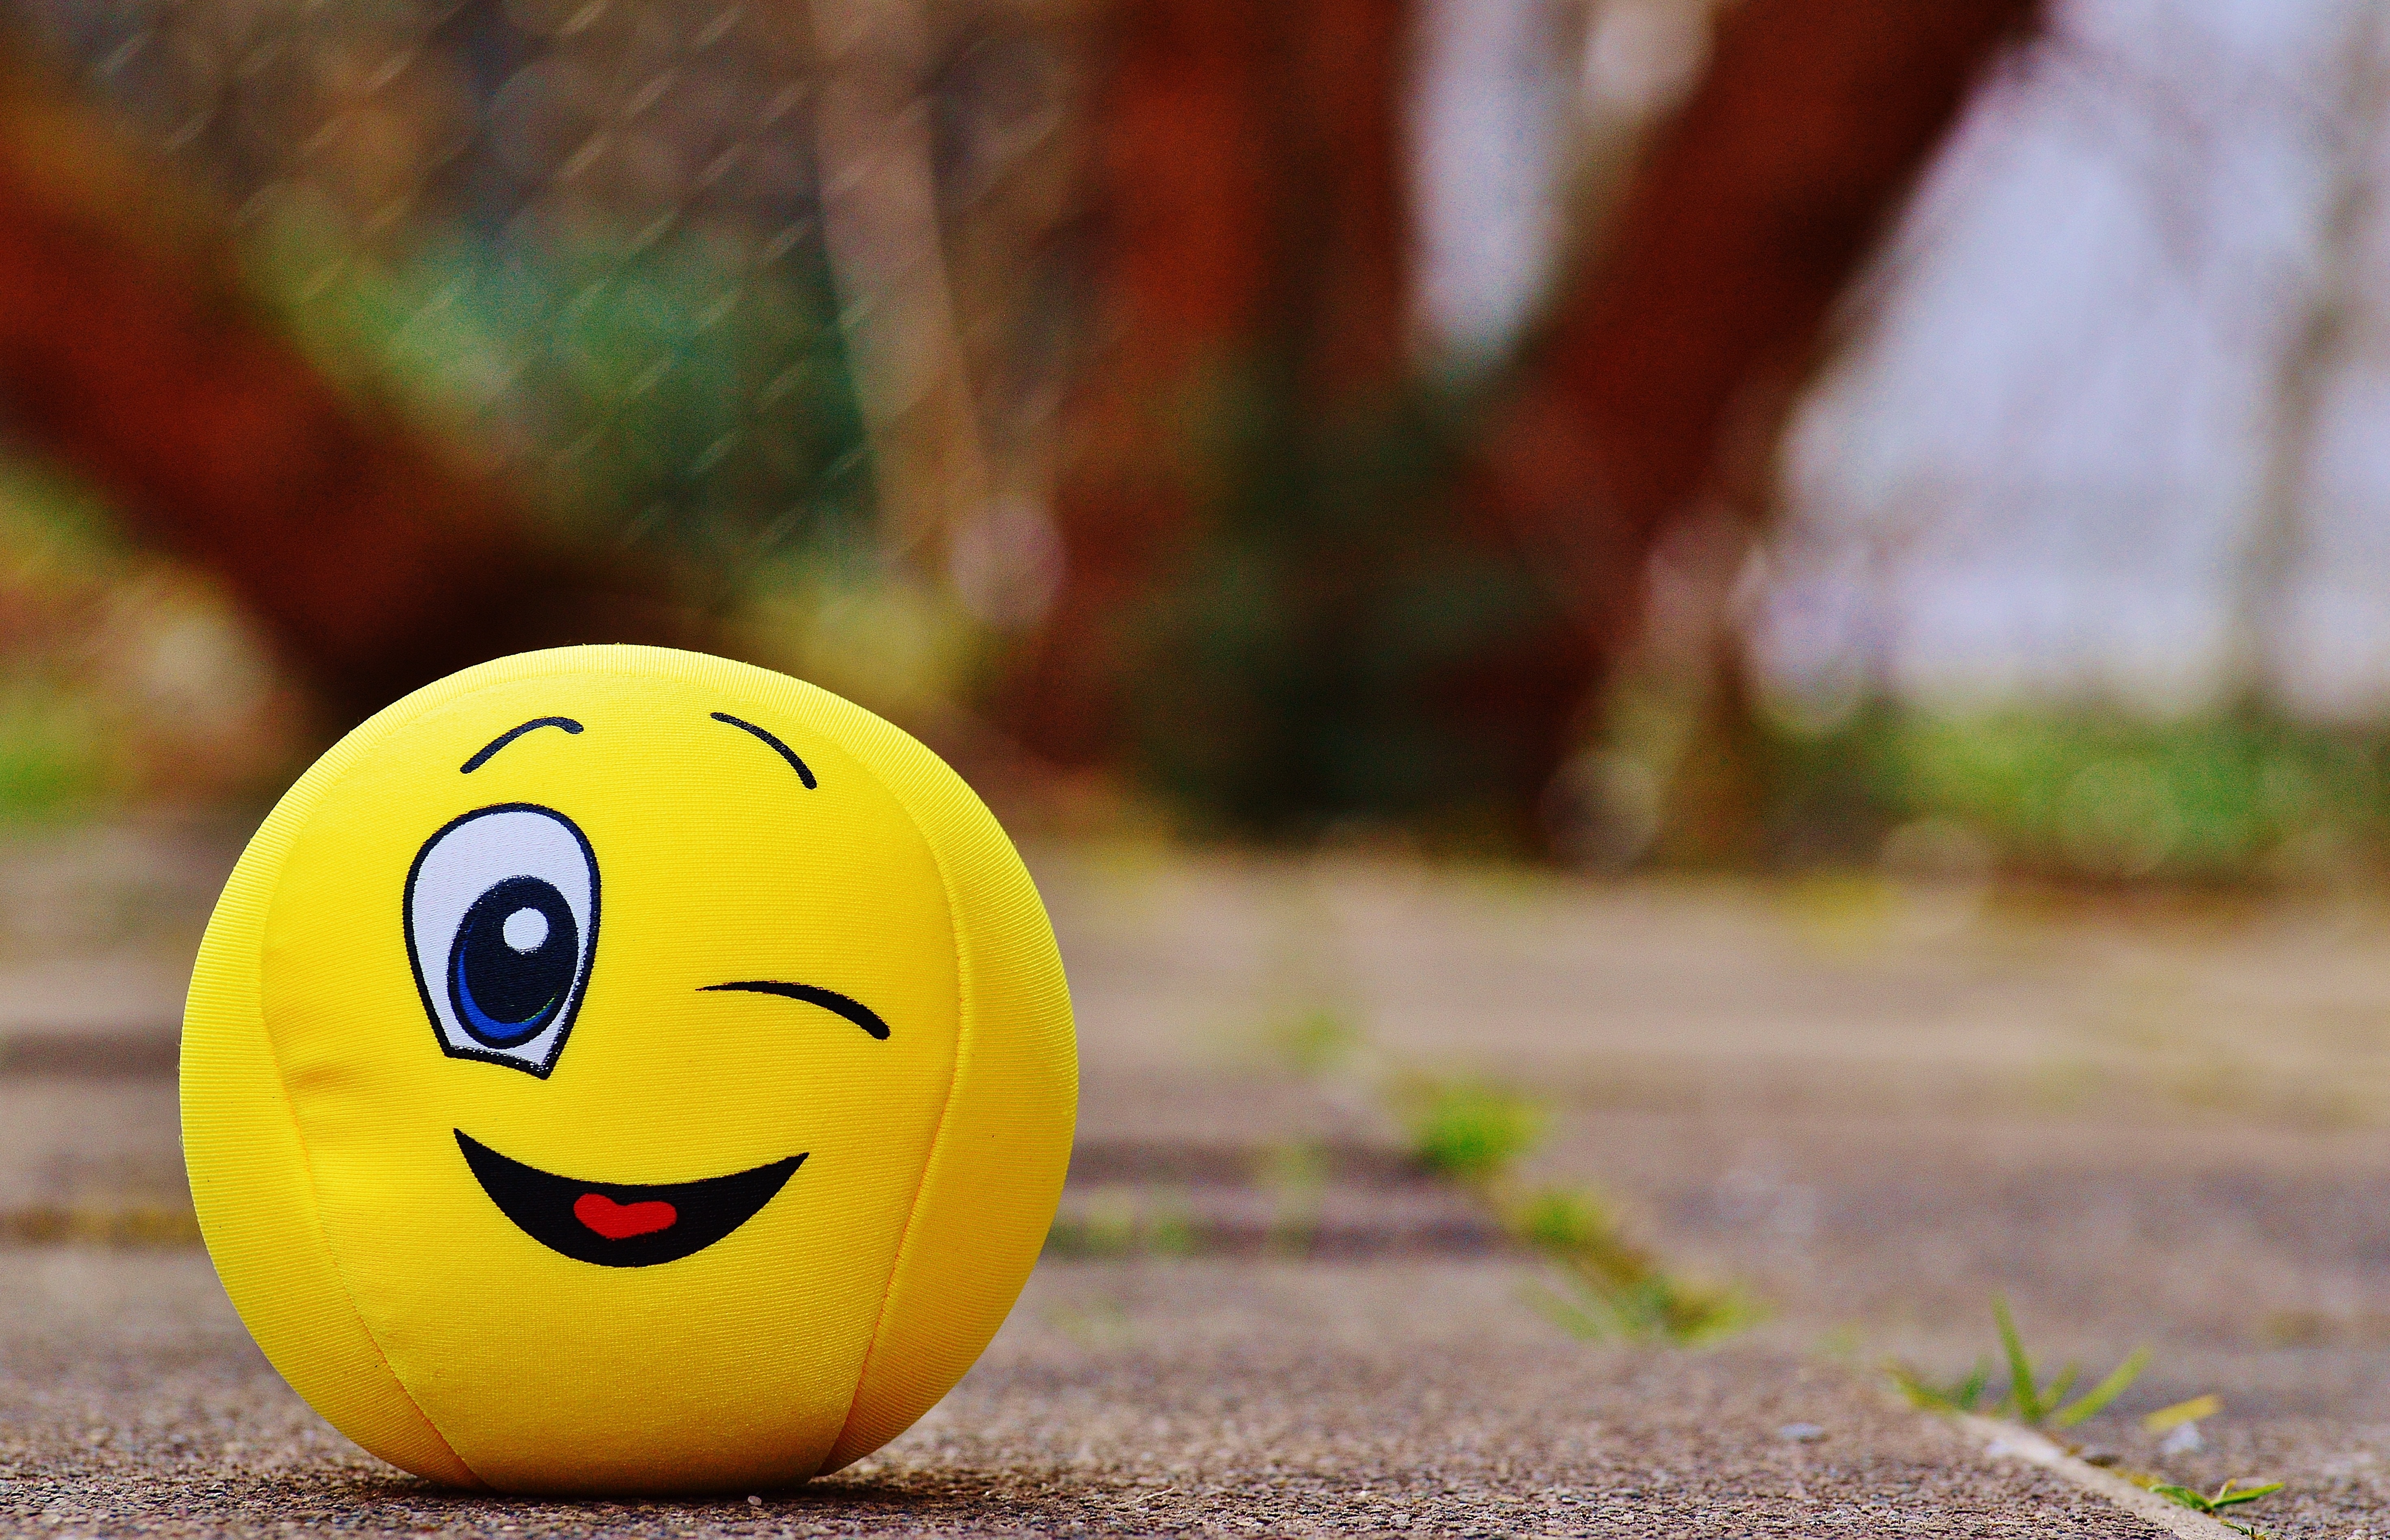 winking smiley ball plush toy on concrete pavement free image